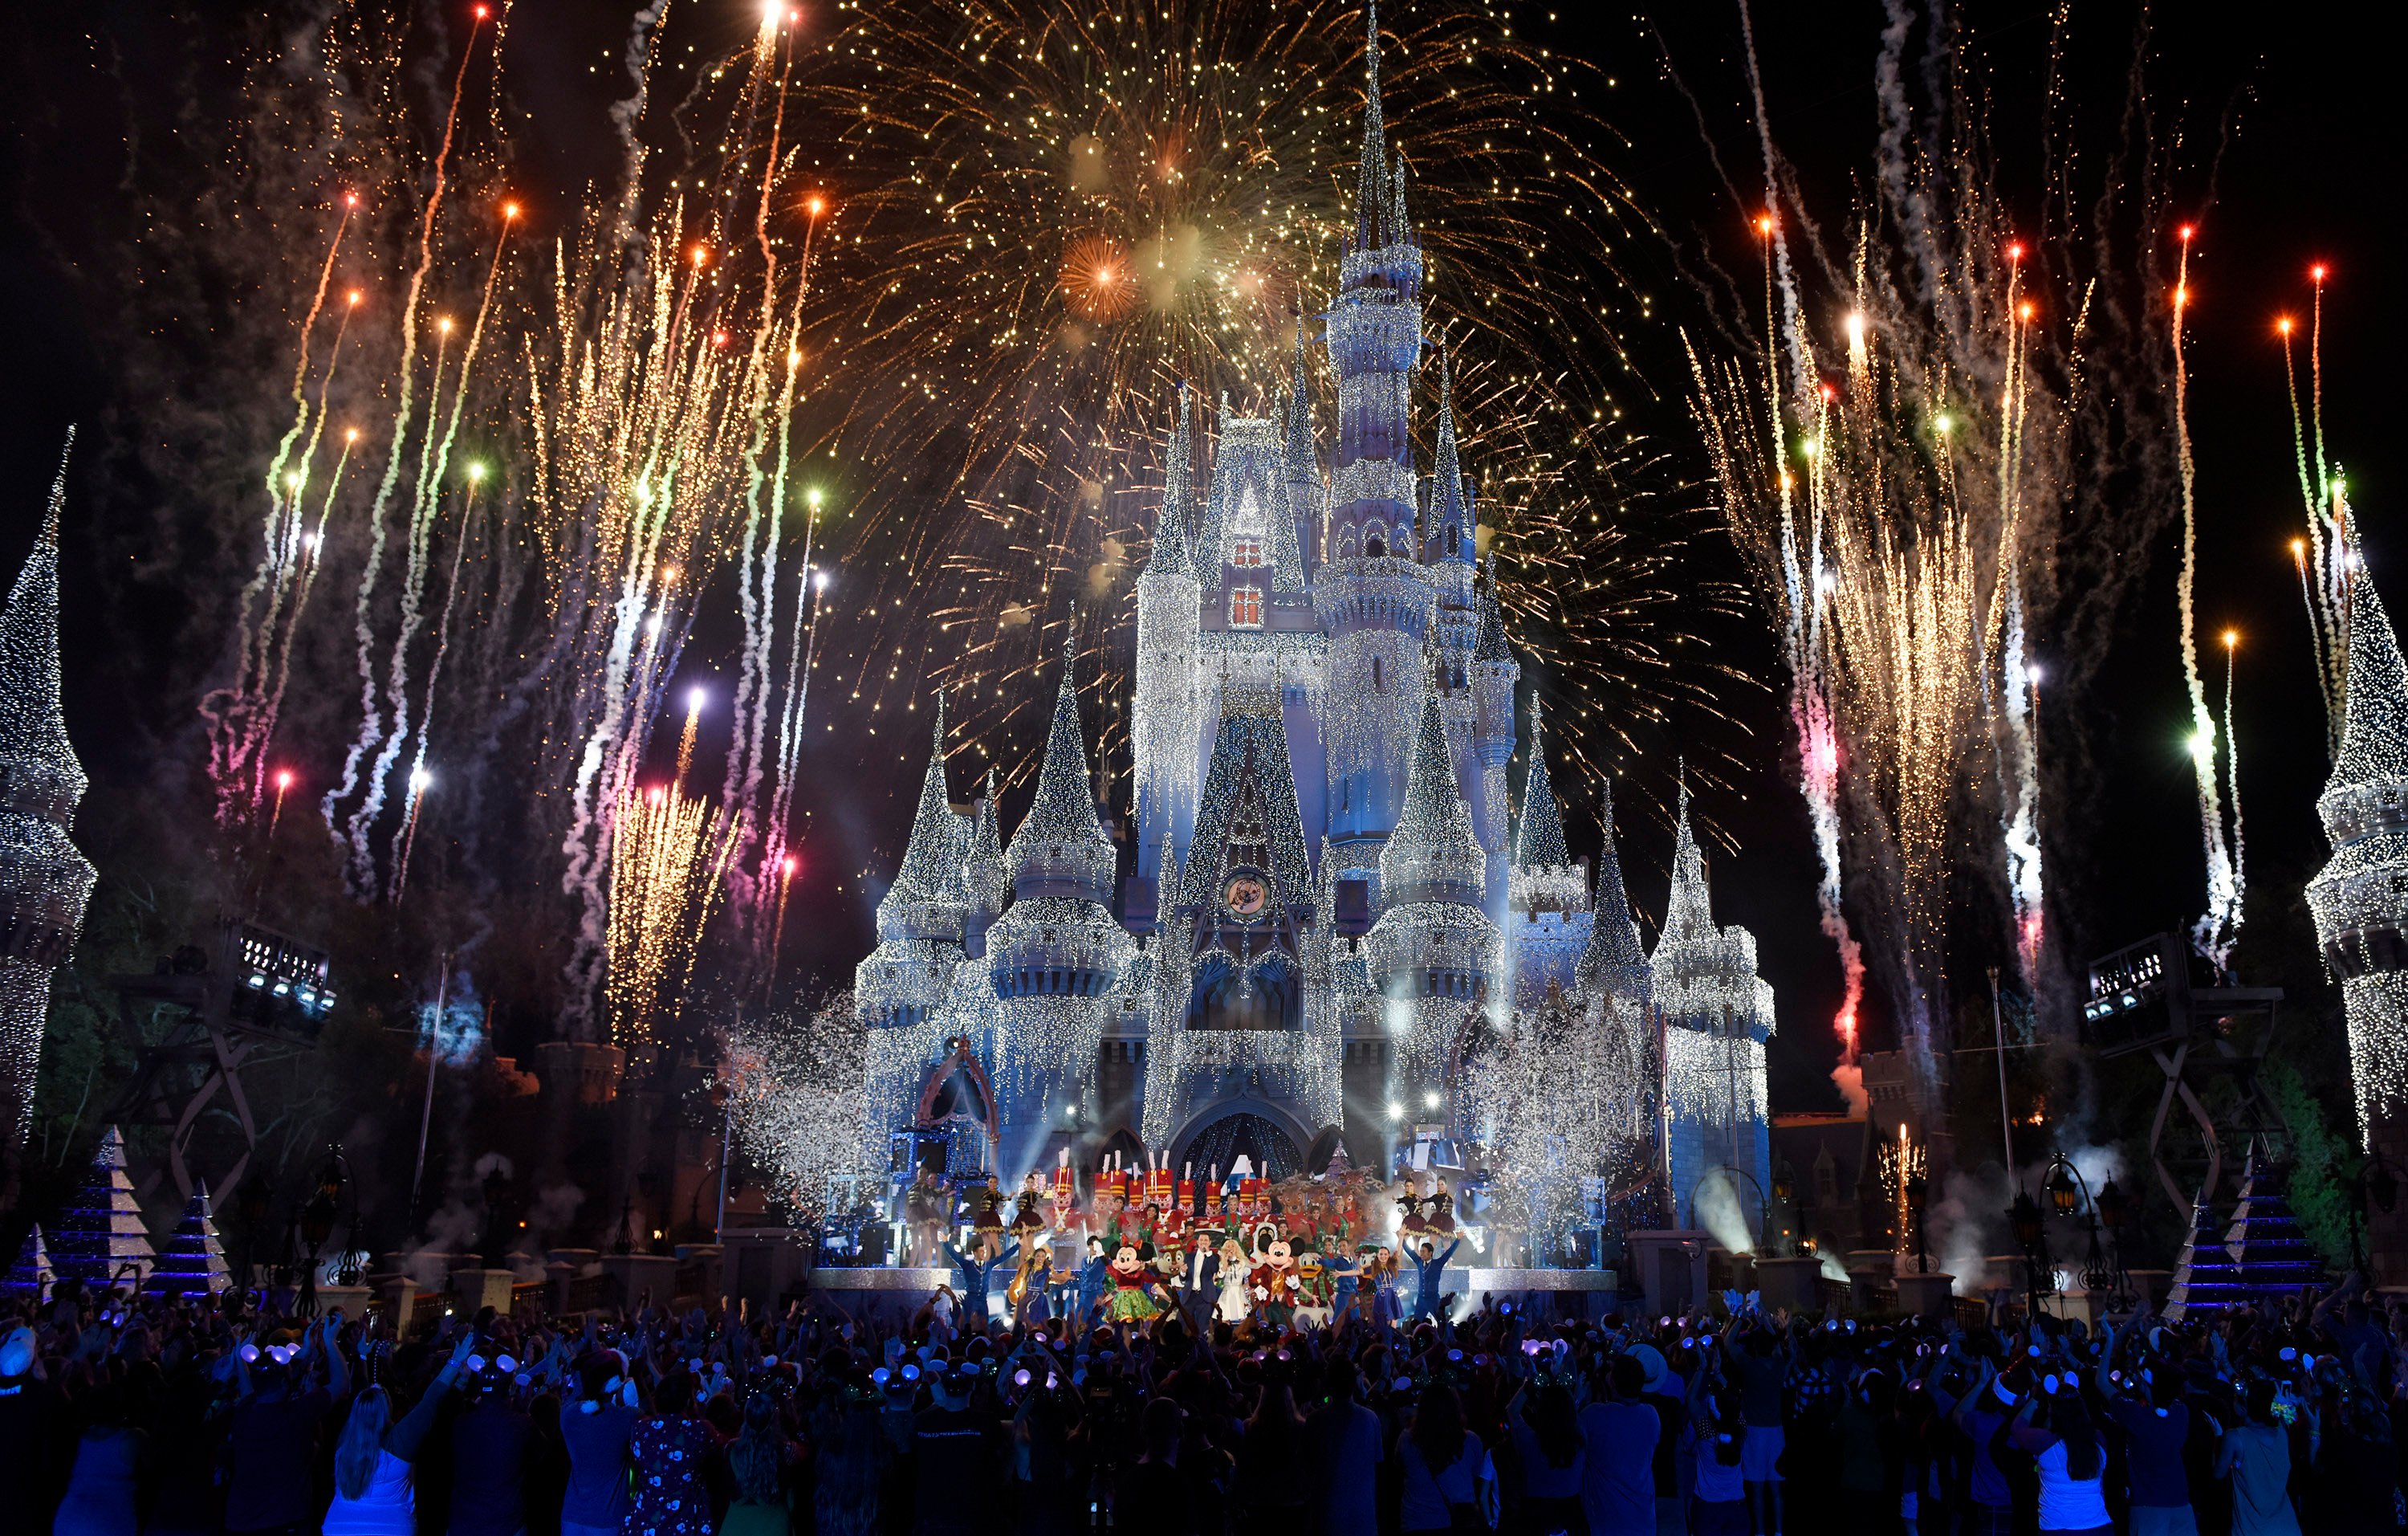 Cinderella's Castle with fireworks